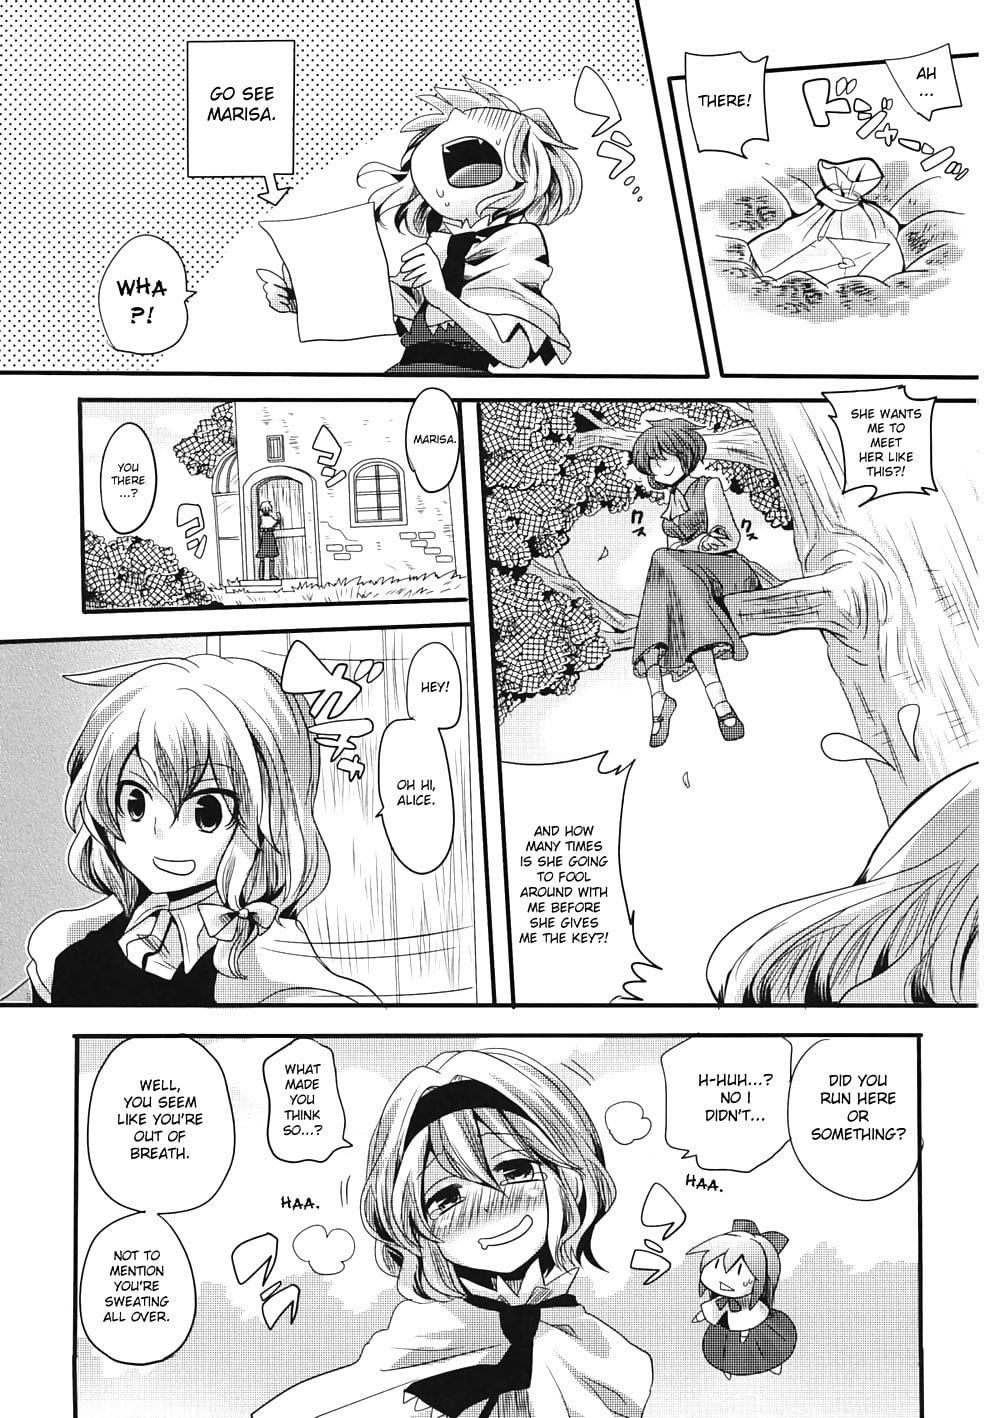 Yuuka Is A Sadist While Alice Is A Masochist Hentai Manga 29 Pics